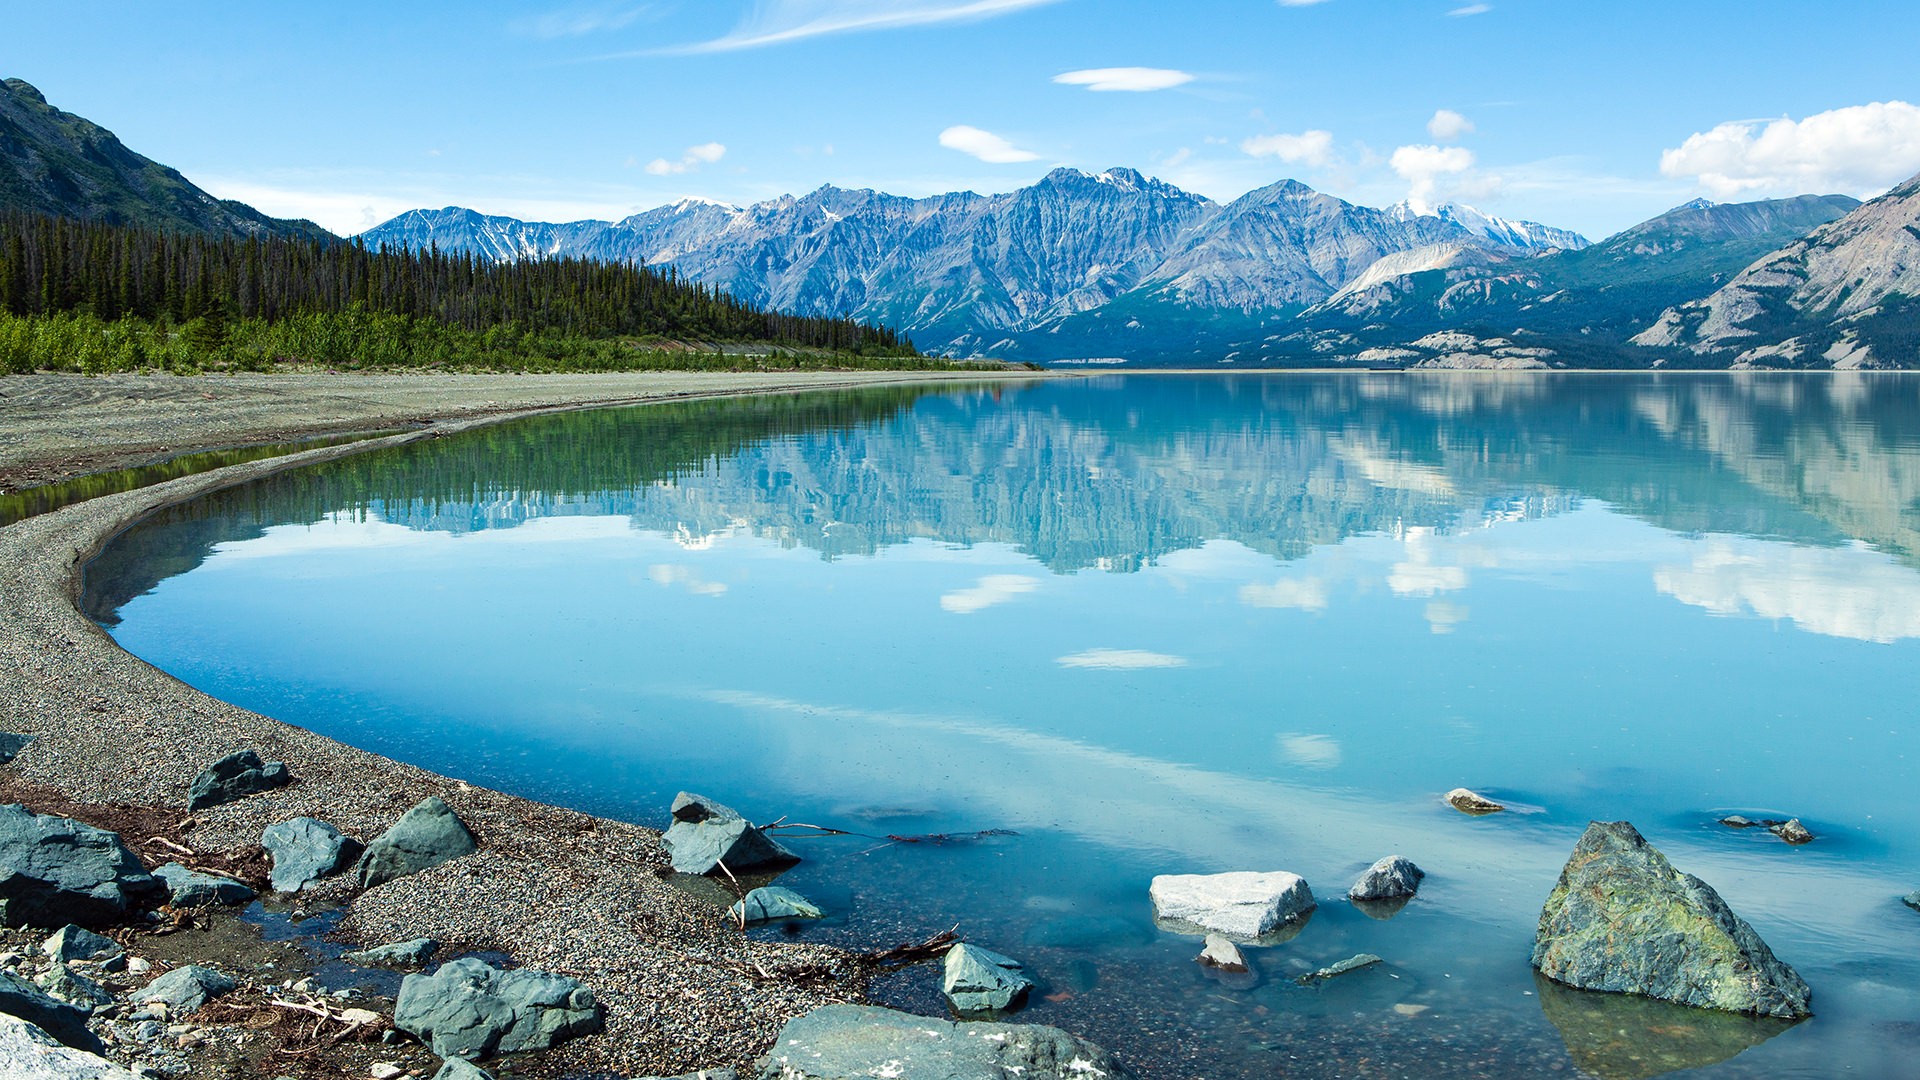 General 1920x1080 nature Canada landscape calm waters mountains lake reflection Yukon